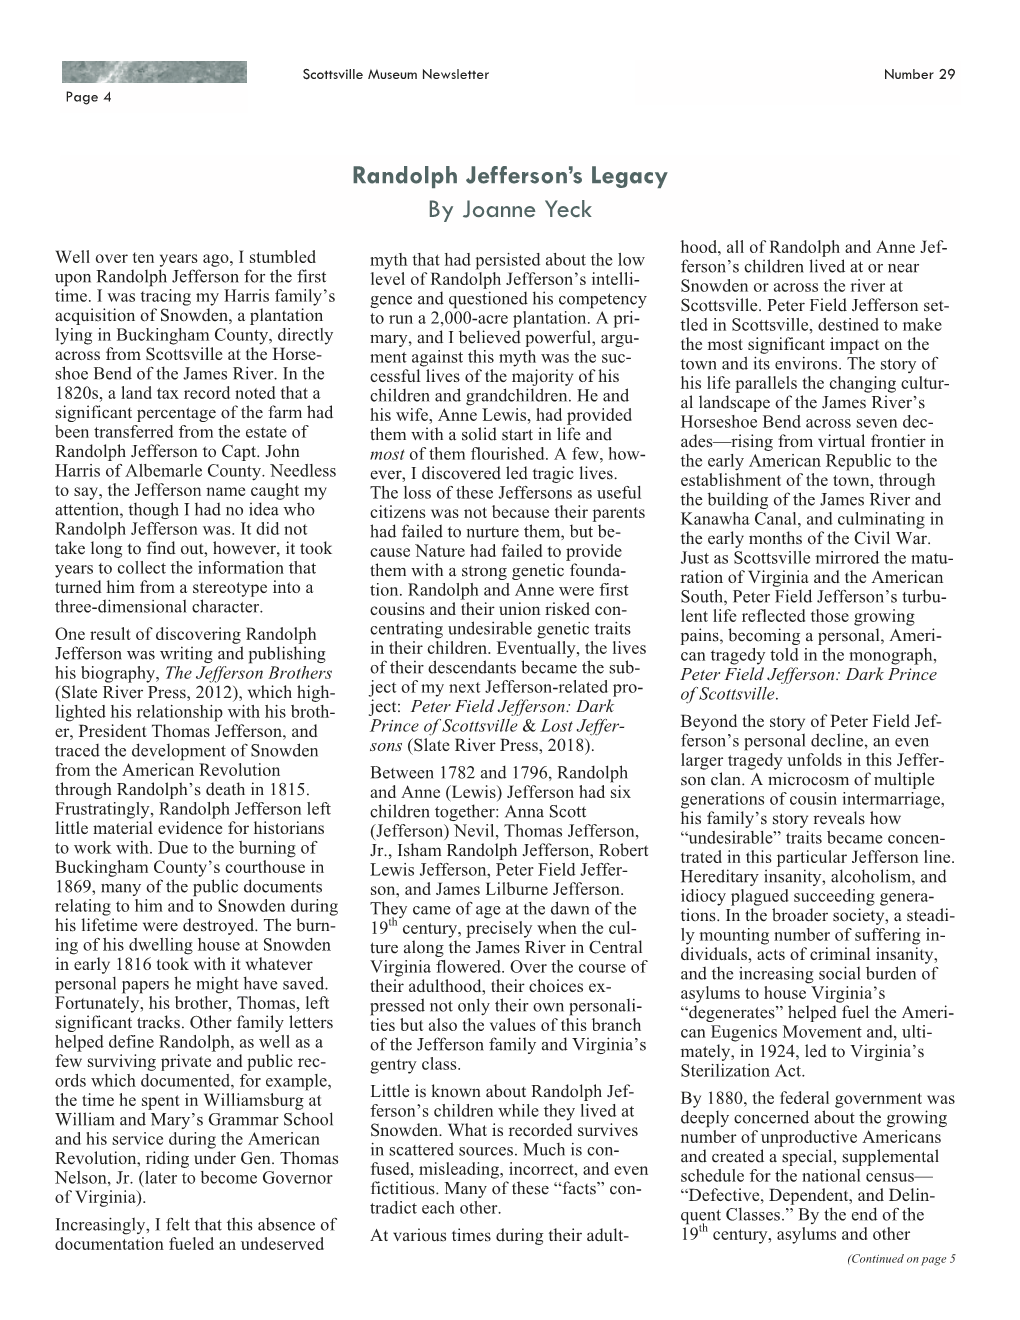 Randolph Jefferson's Legacy by Joanne Yeck